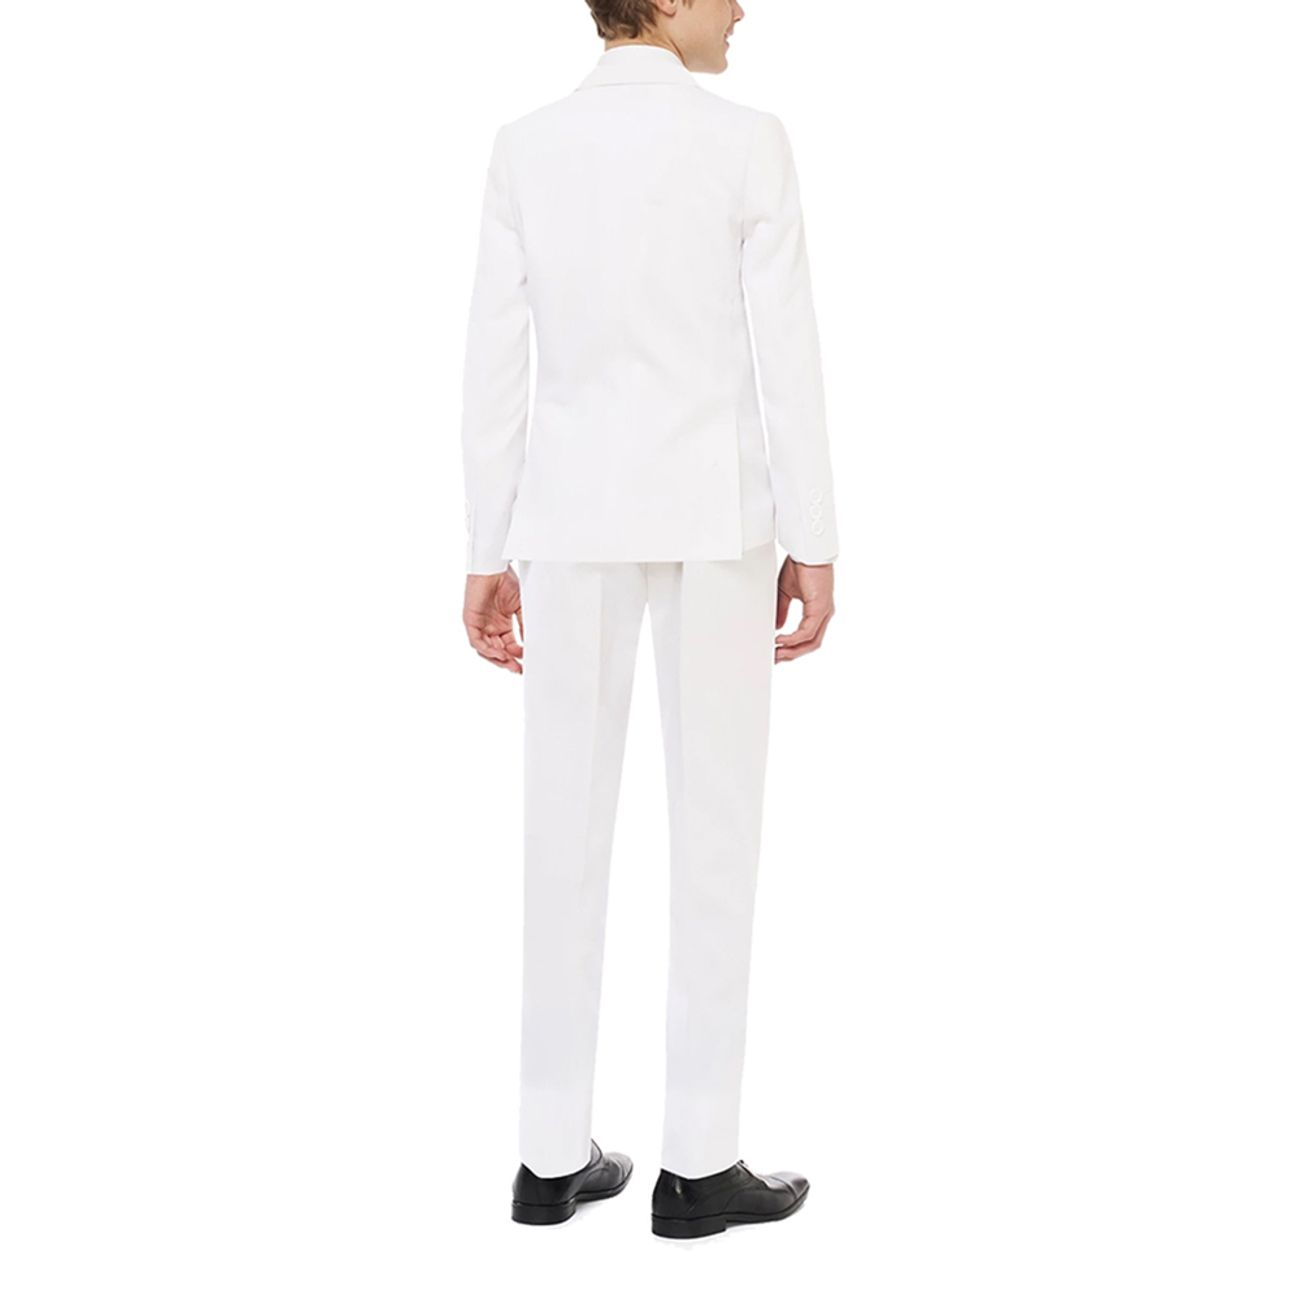 opposuits-teen-white-knight-kostym-79473-6